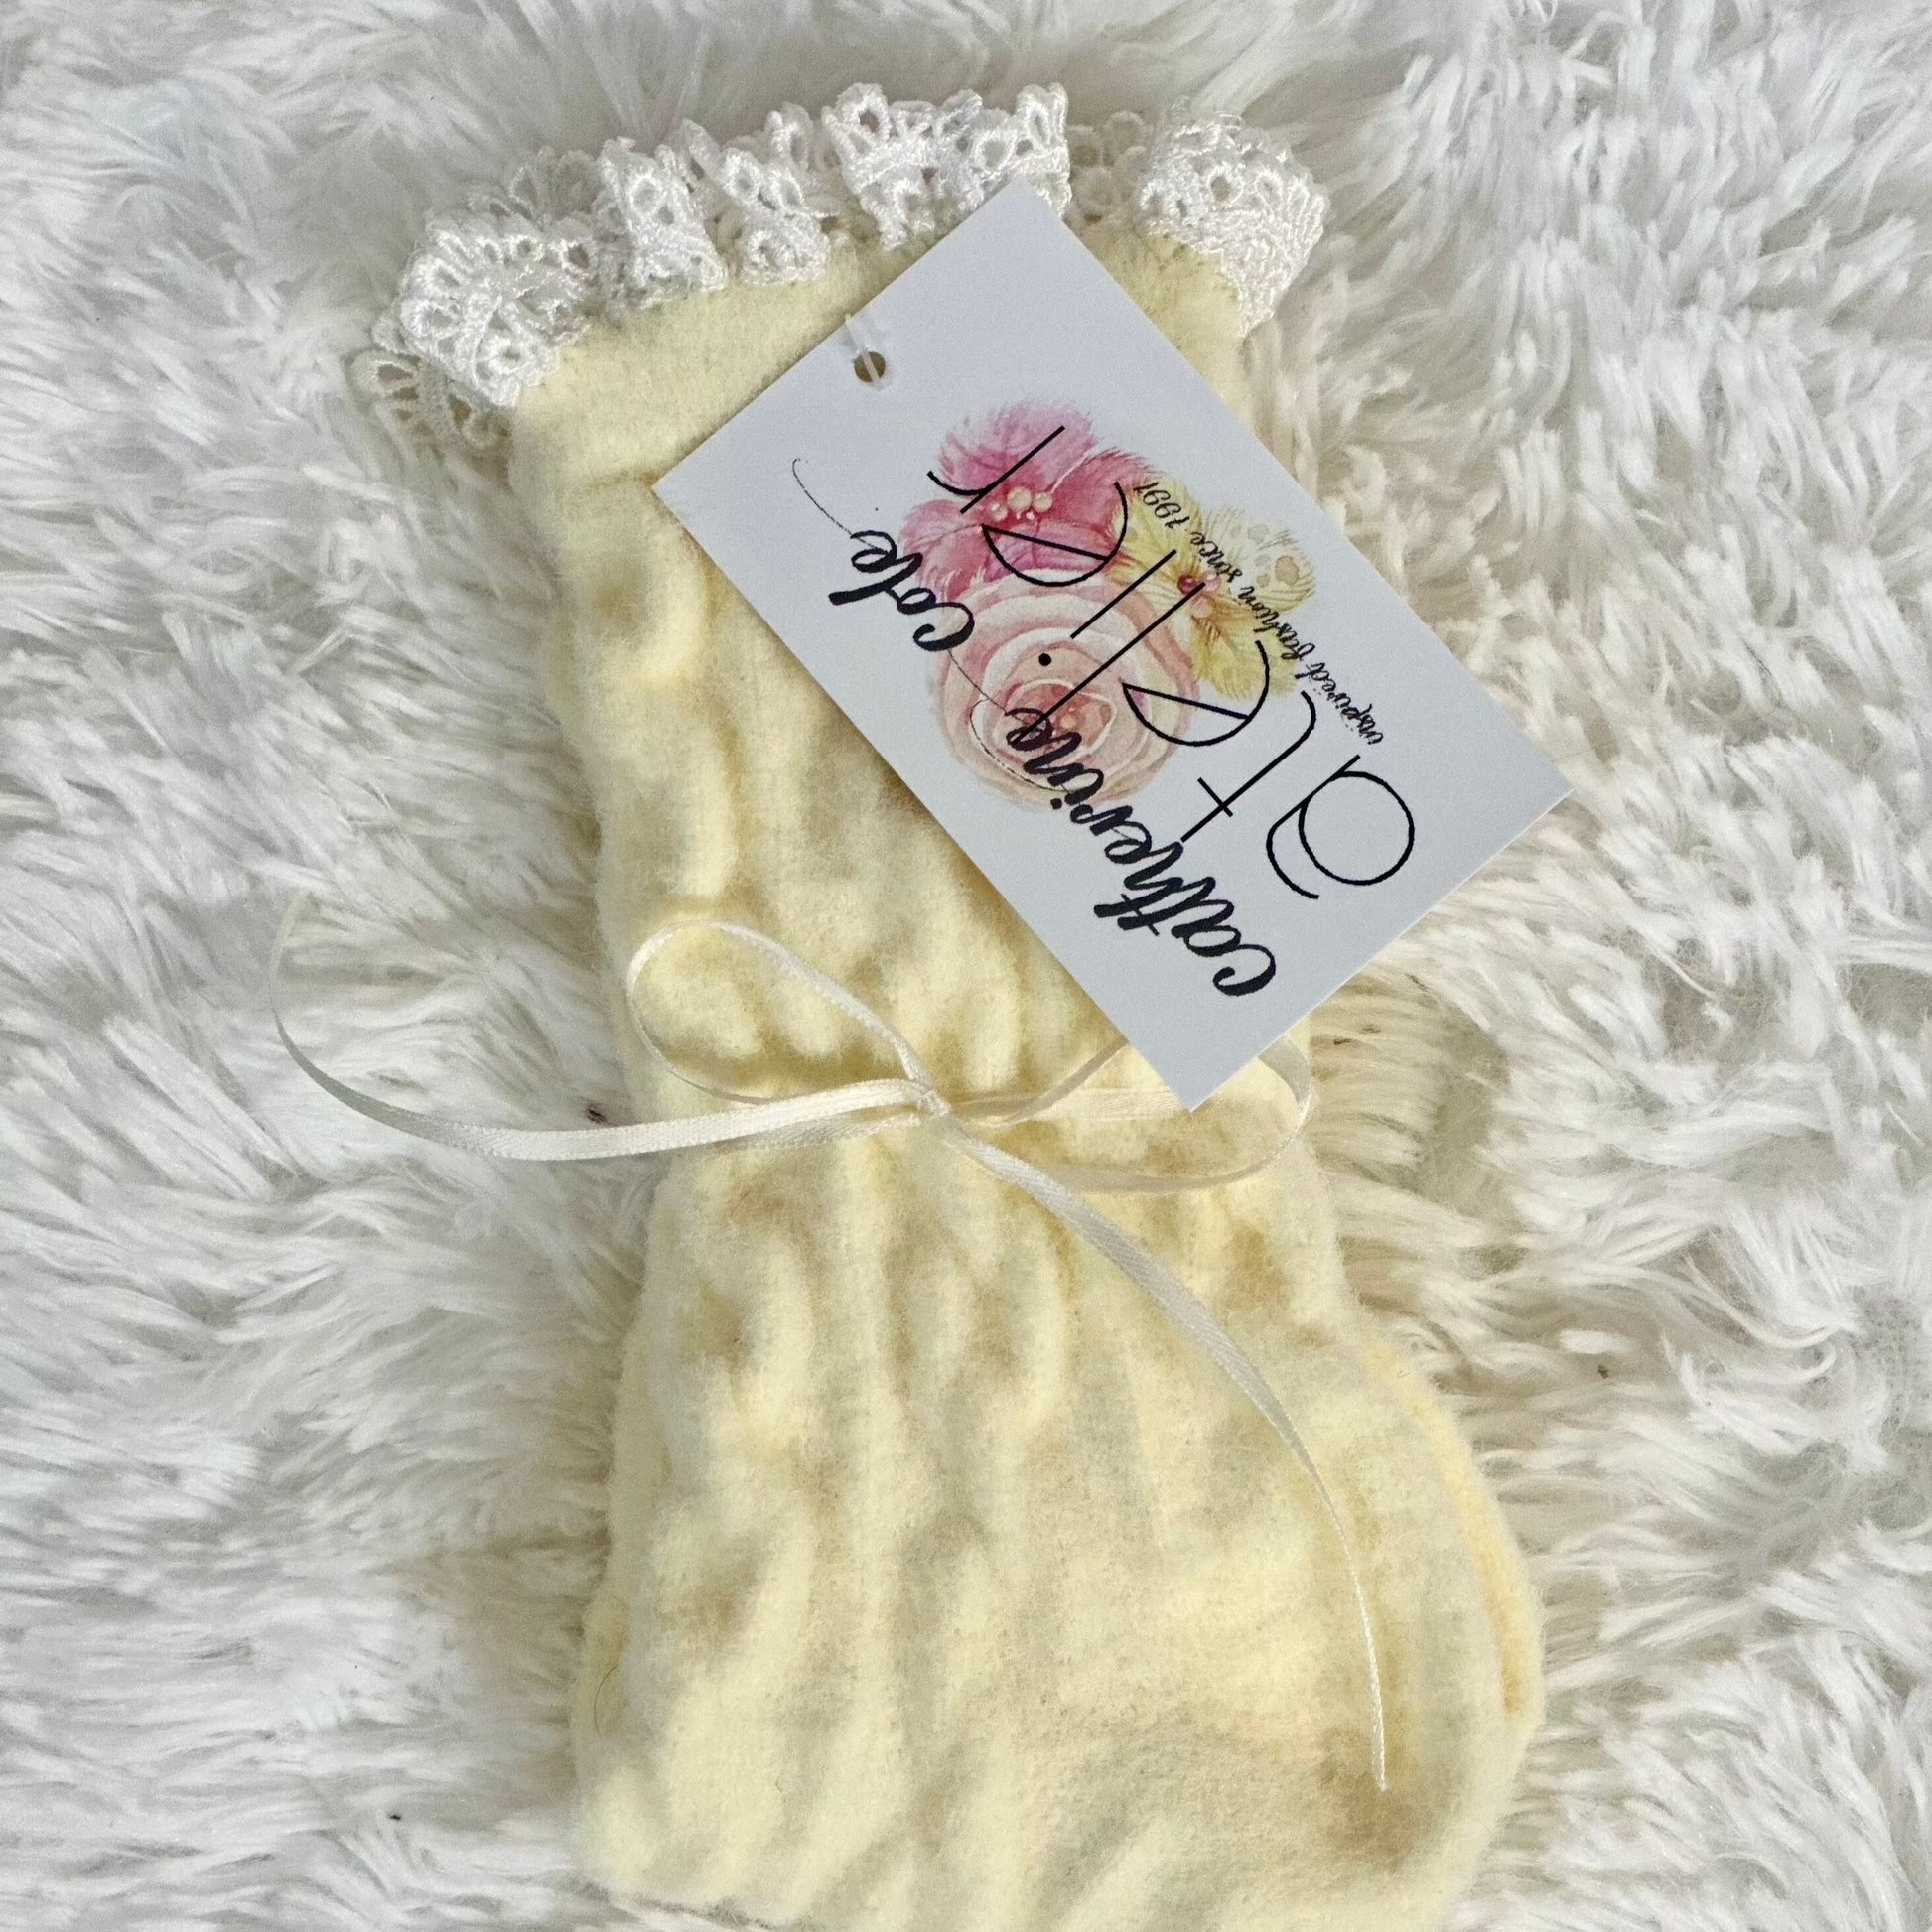 Heavenly ultra soft gift socks ladies, cool lace socks for women.